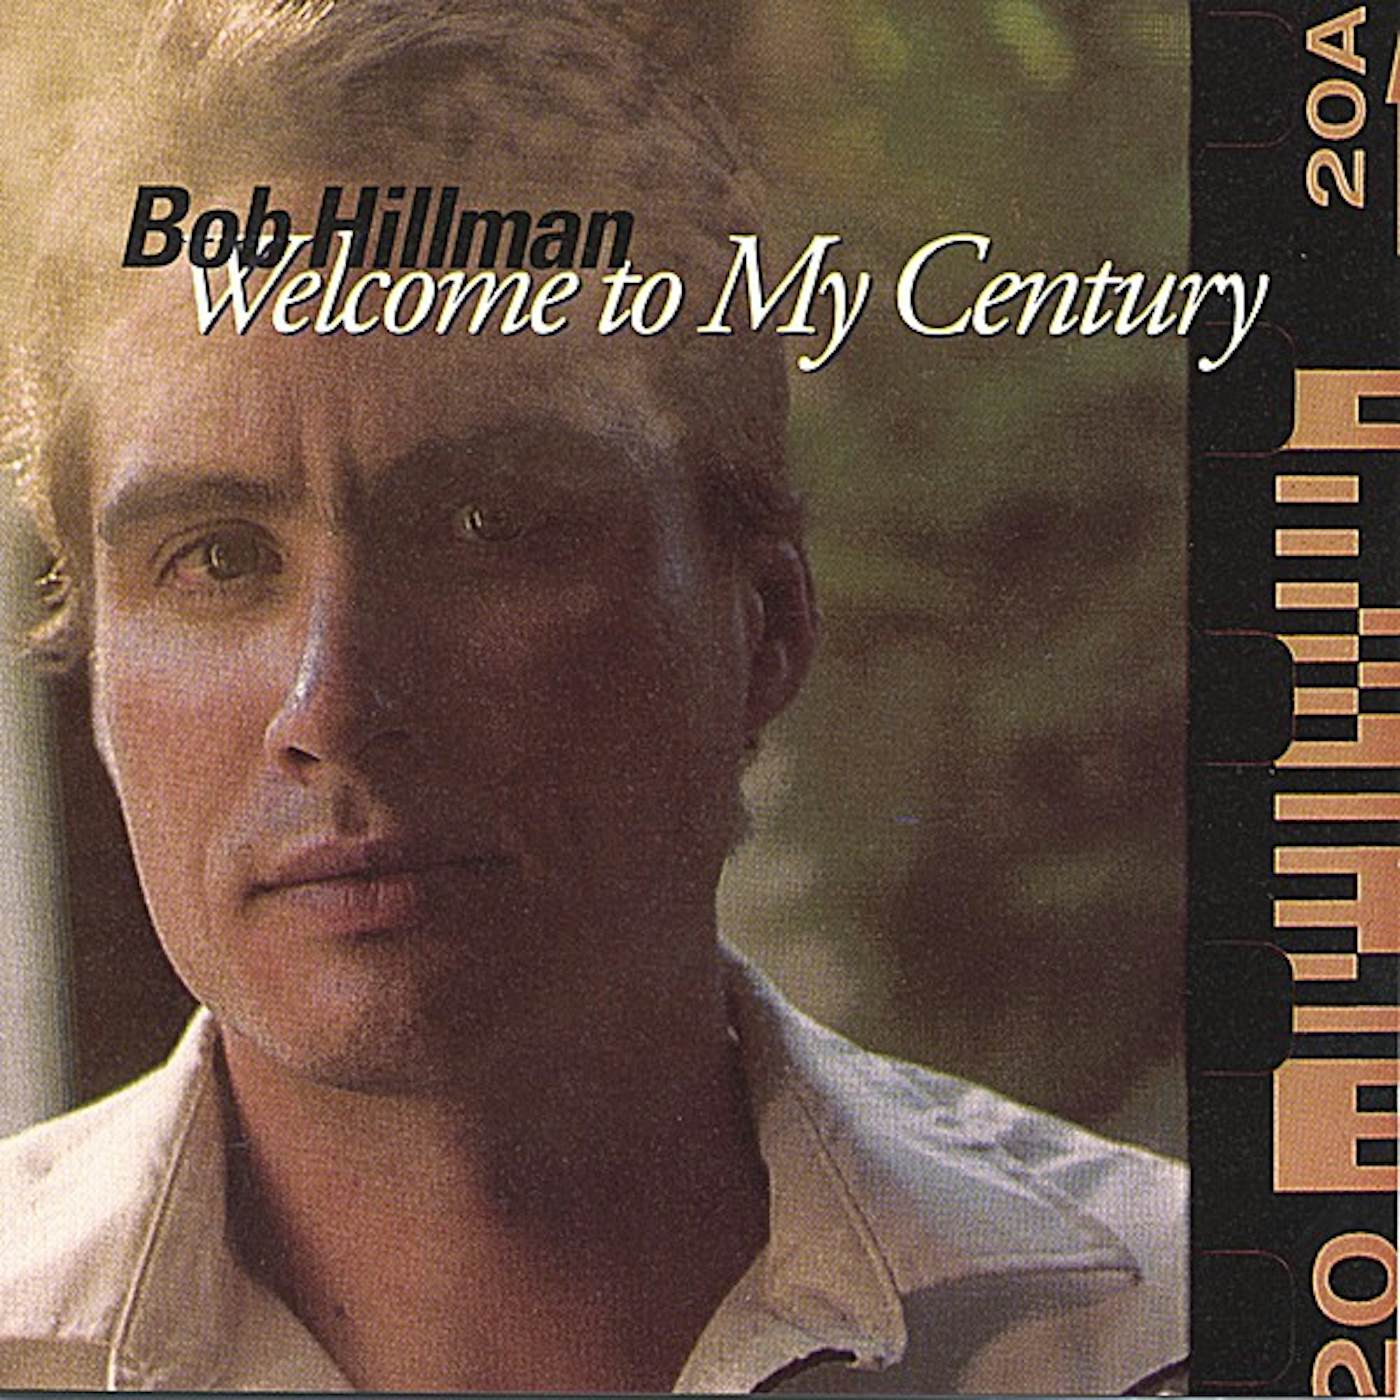 Bob Hillman WELCOME TO MY CENTURY CD